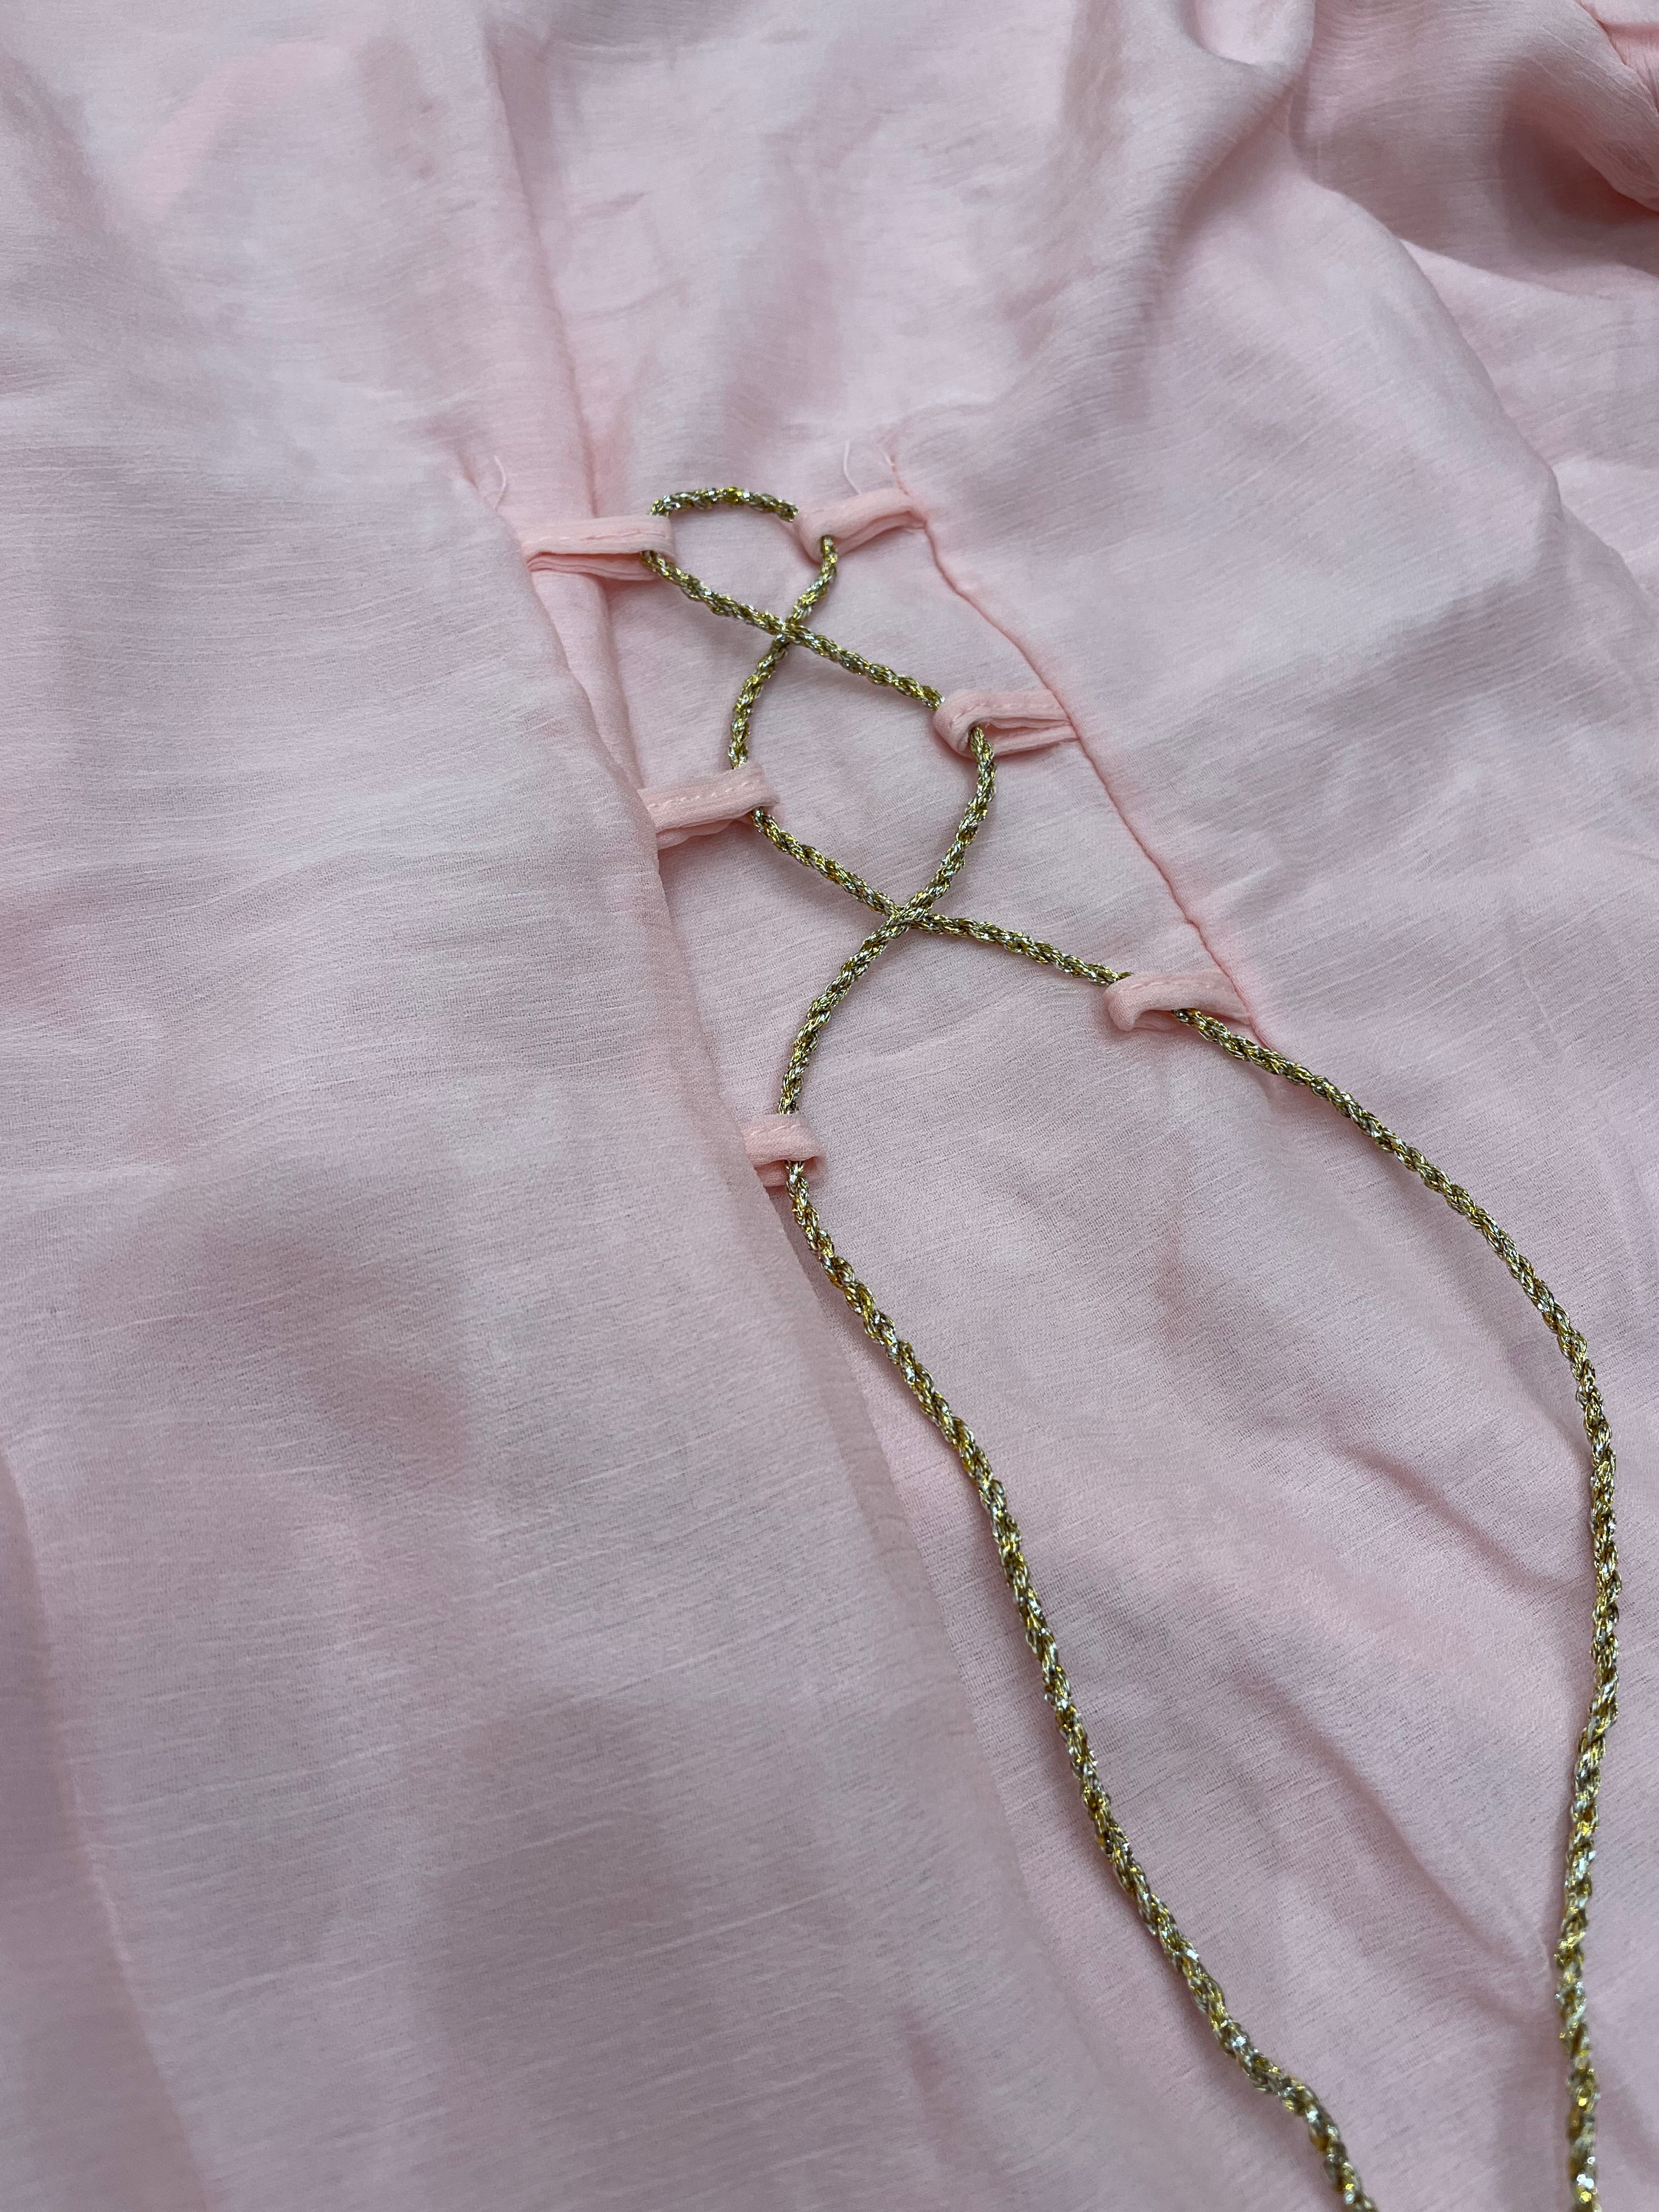 Pink Chiffon Sharara - Gold Embroidery